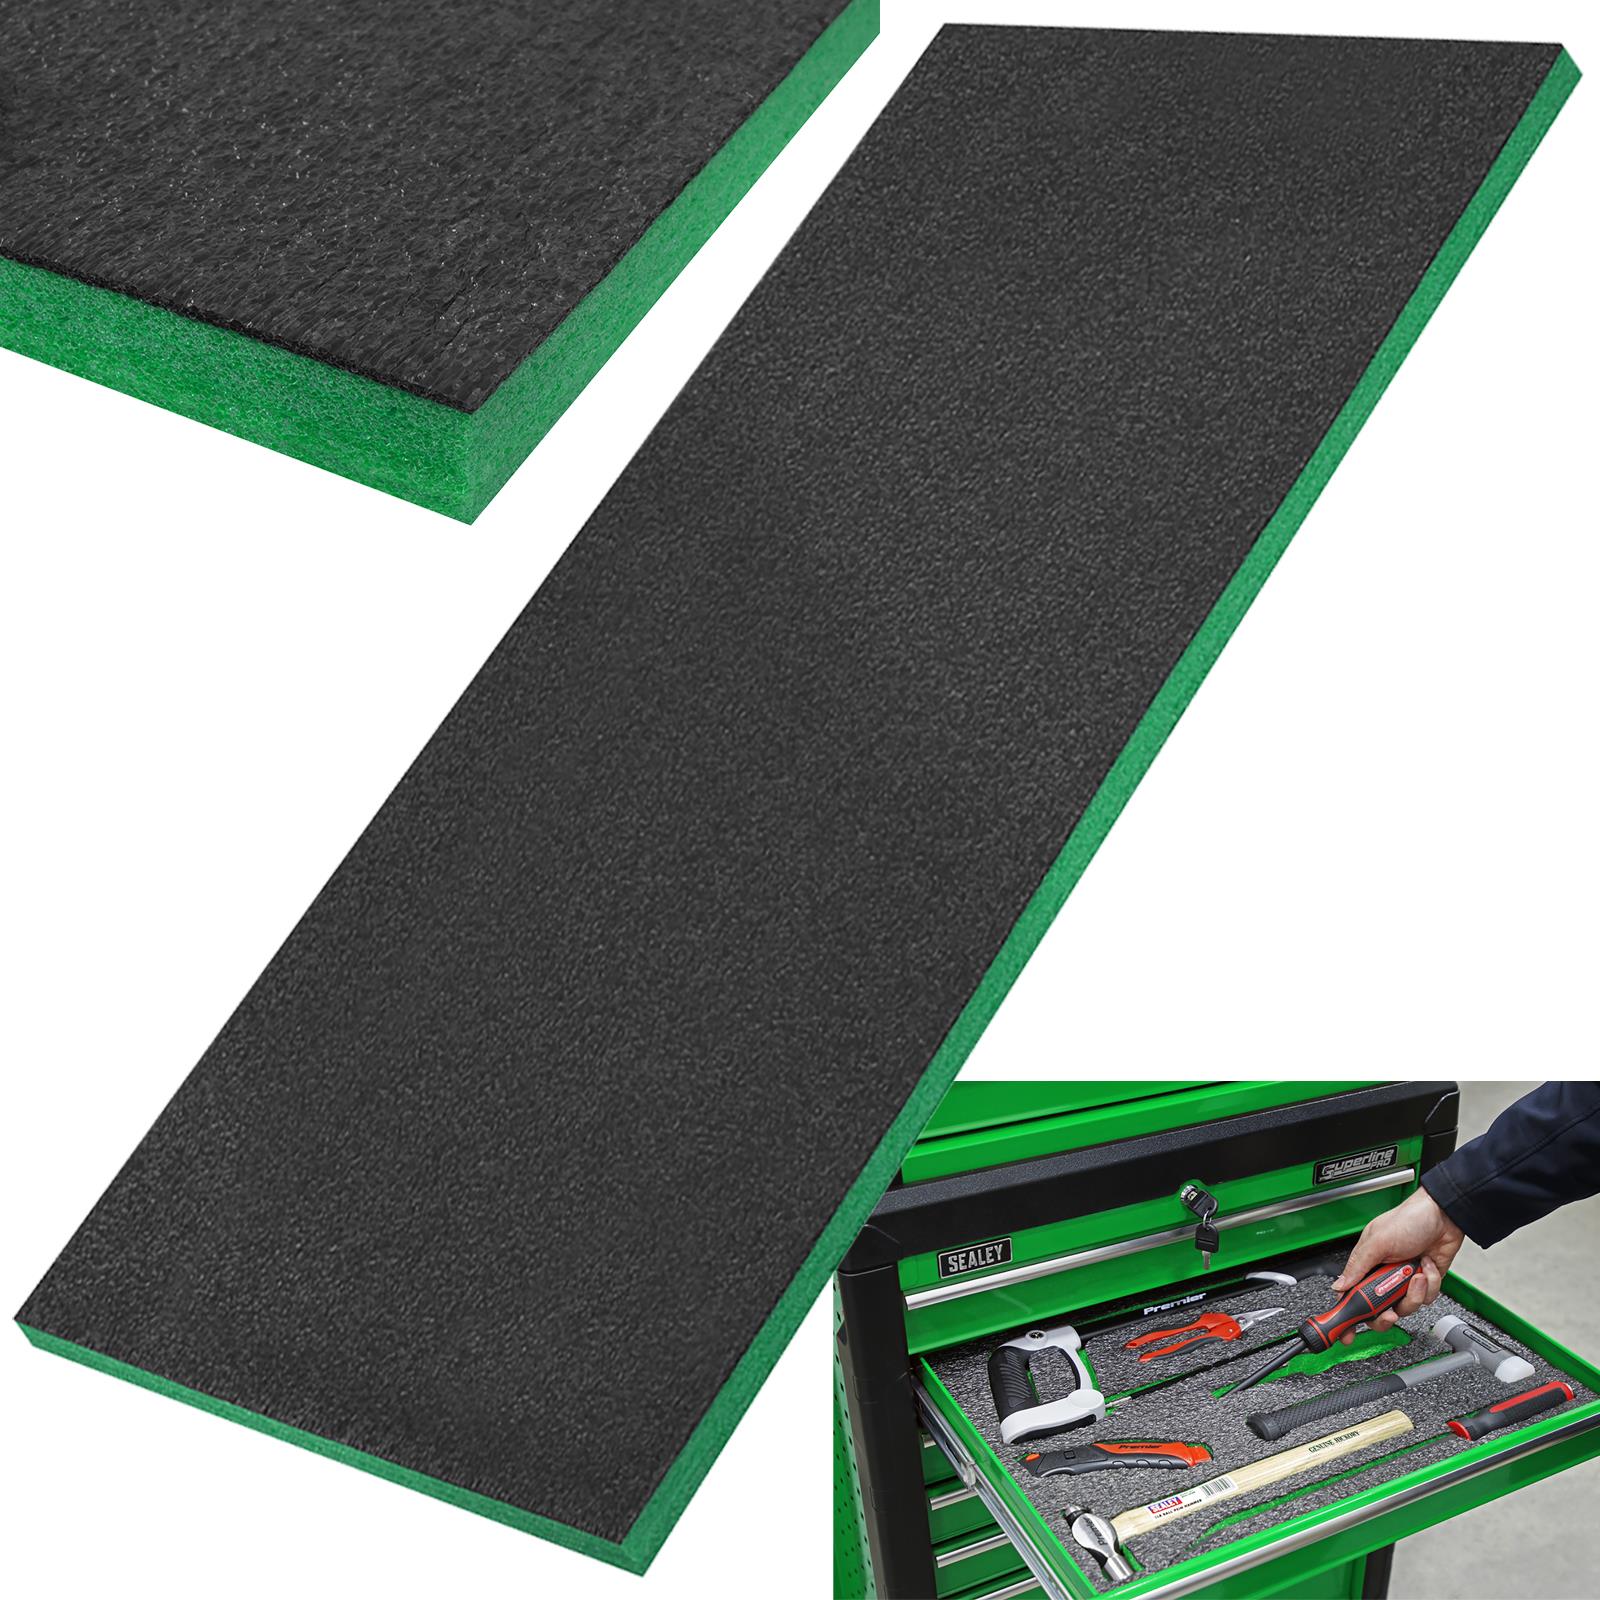 Sealey Easy Peel Shadow Foam Green Black 1200 x 550 x 30mm Tool Tray Insert